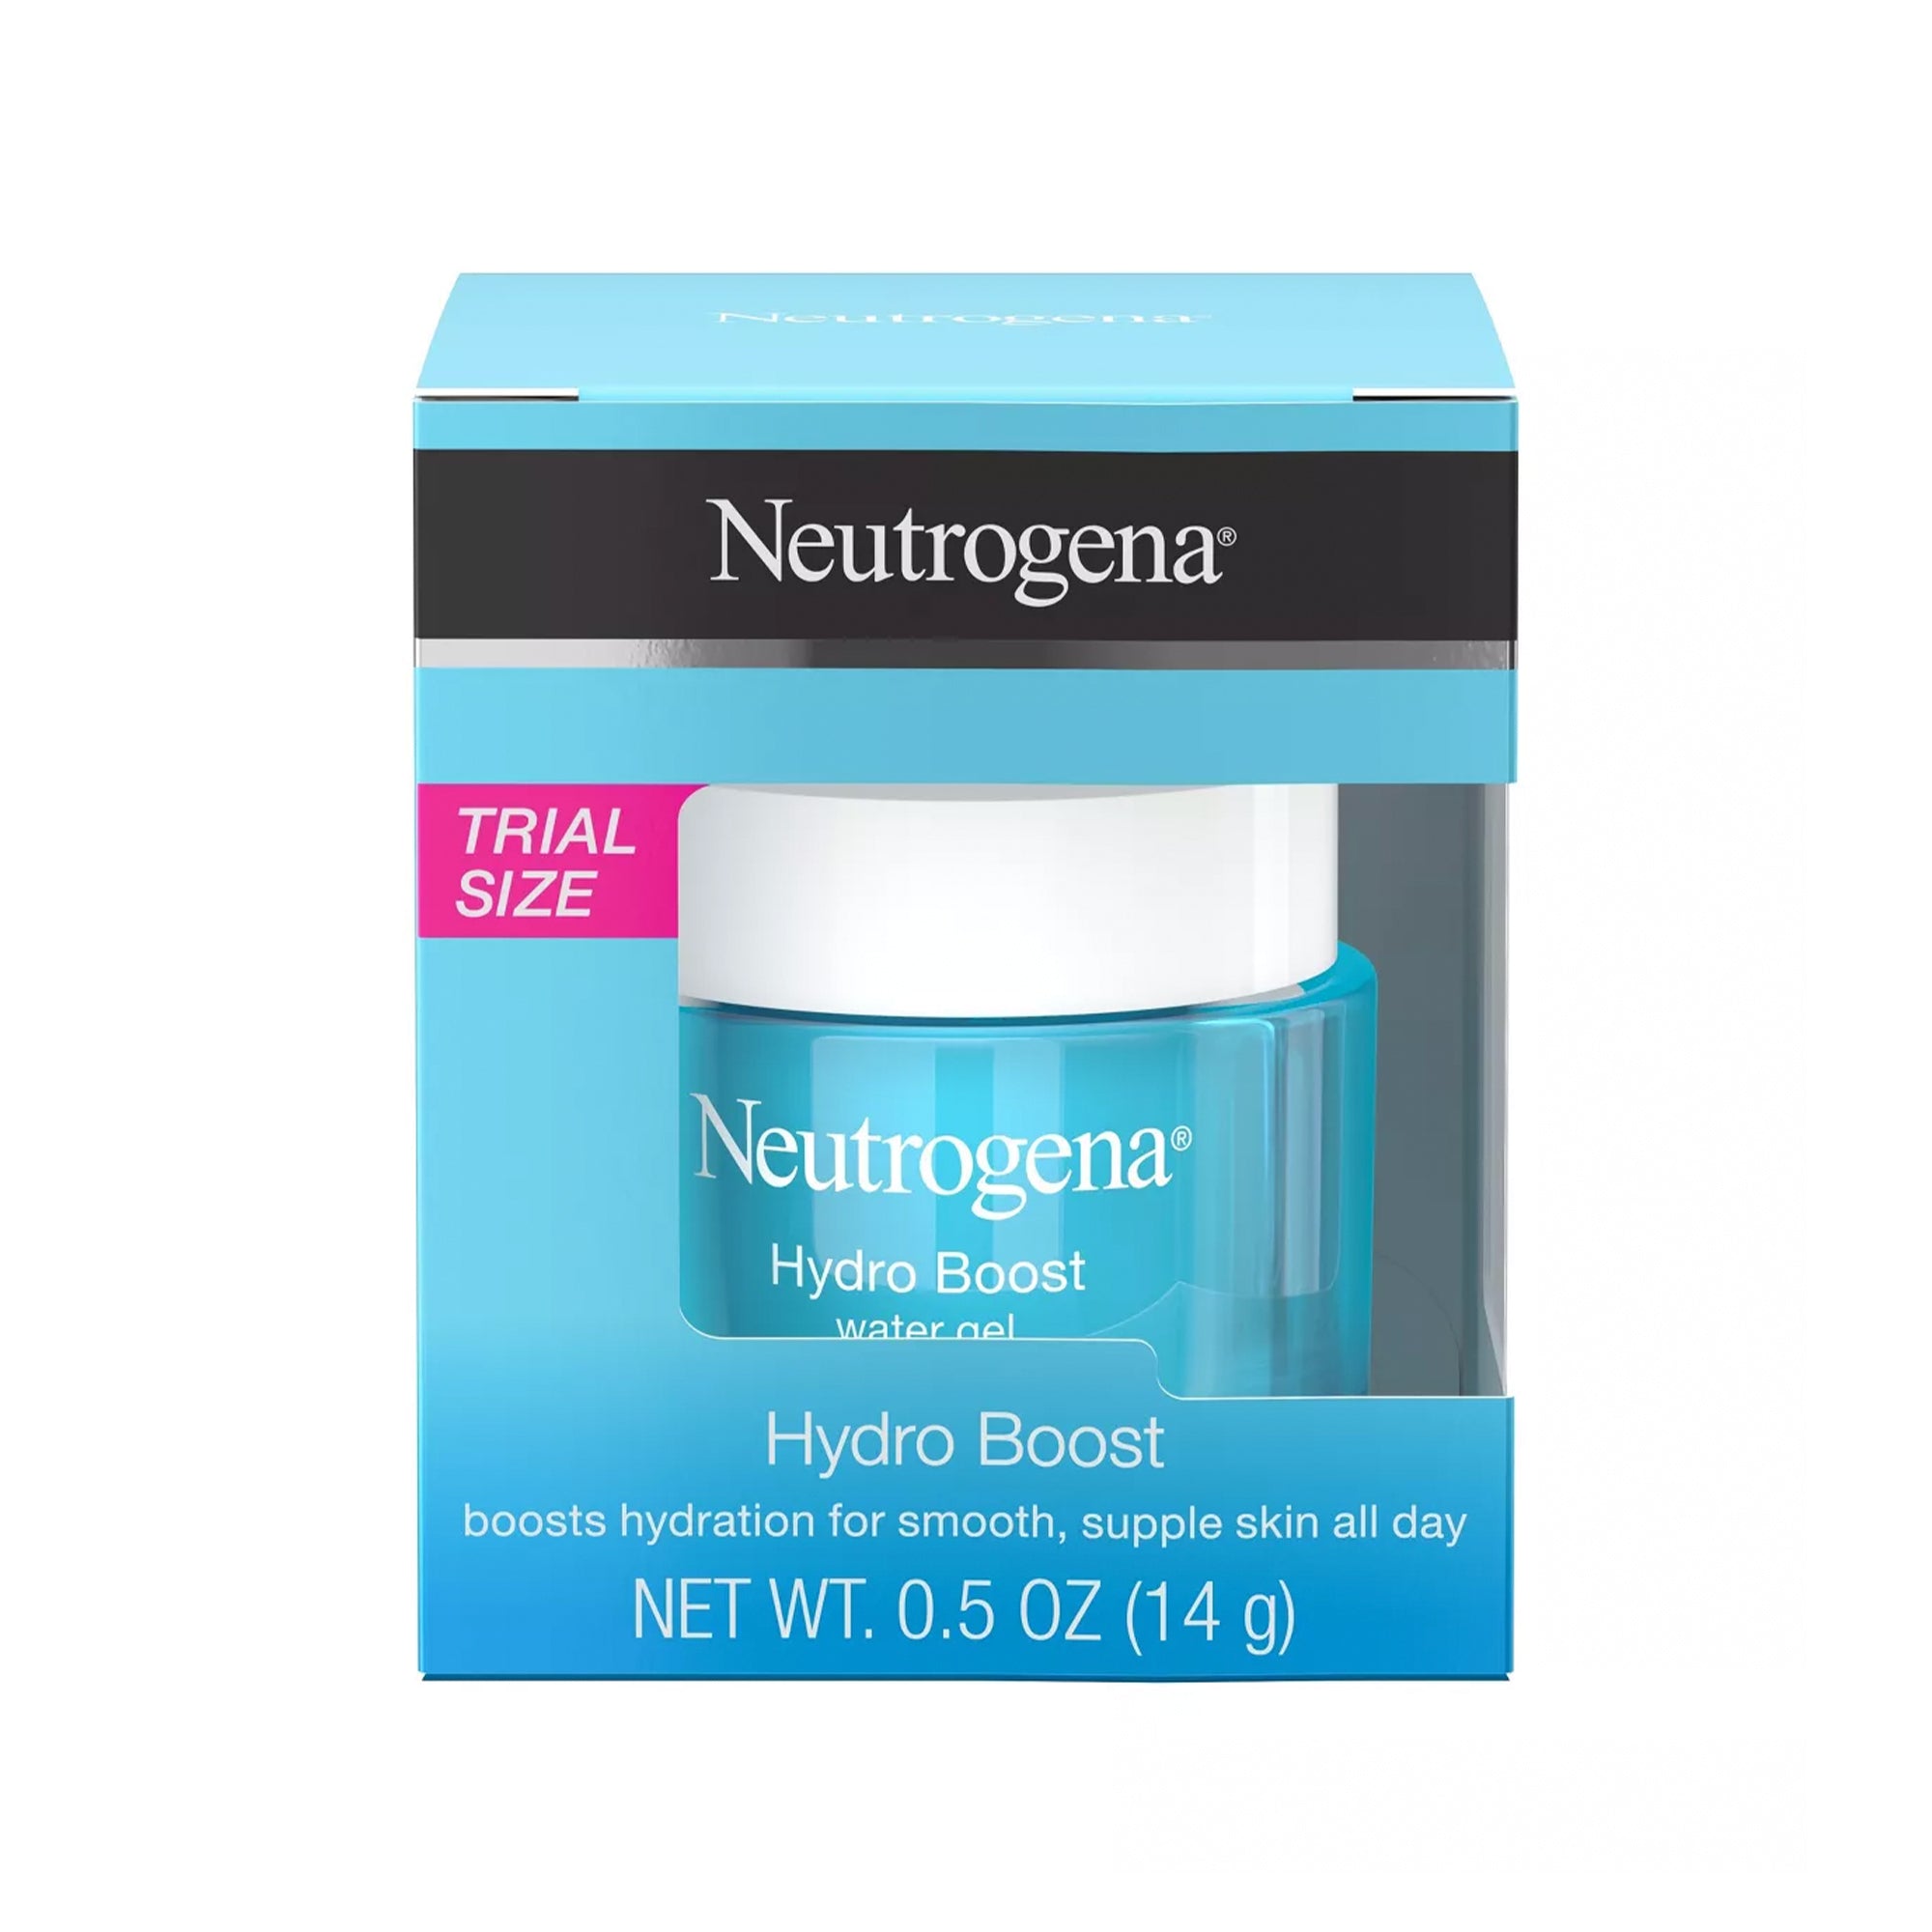 Neutrogena Hydro Boost Hydrating Water Gel Moisturizer with Hyaluronic Acid for Dry Skin Travel Size  .5 oz